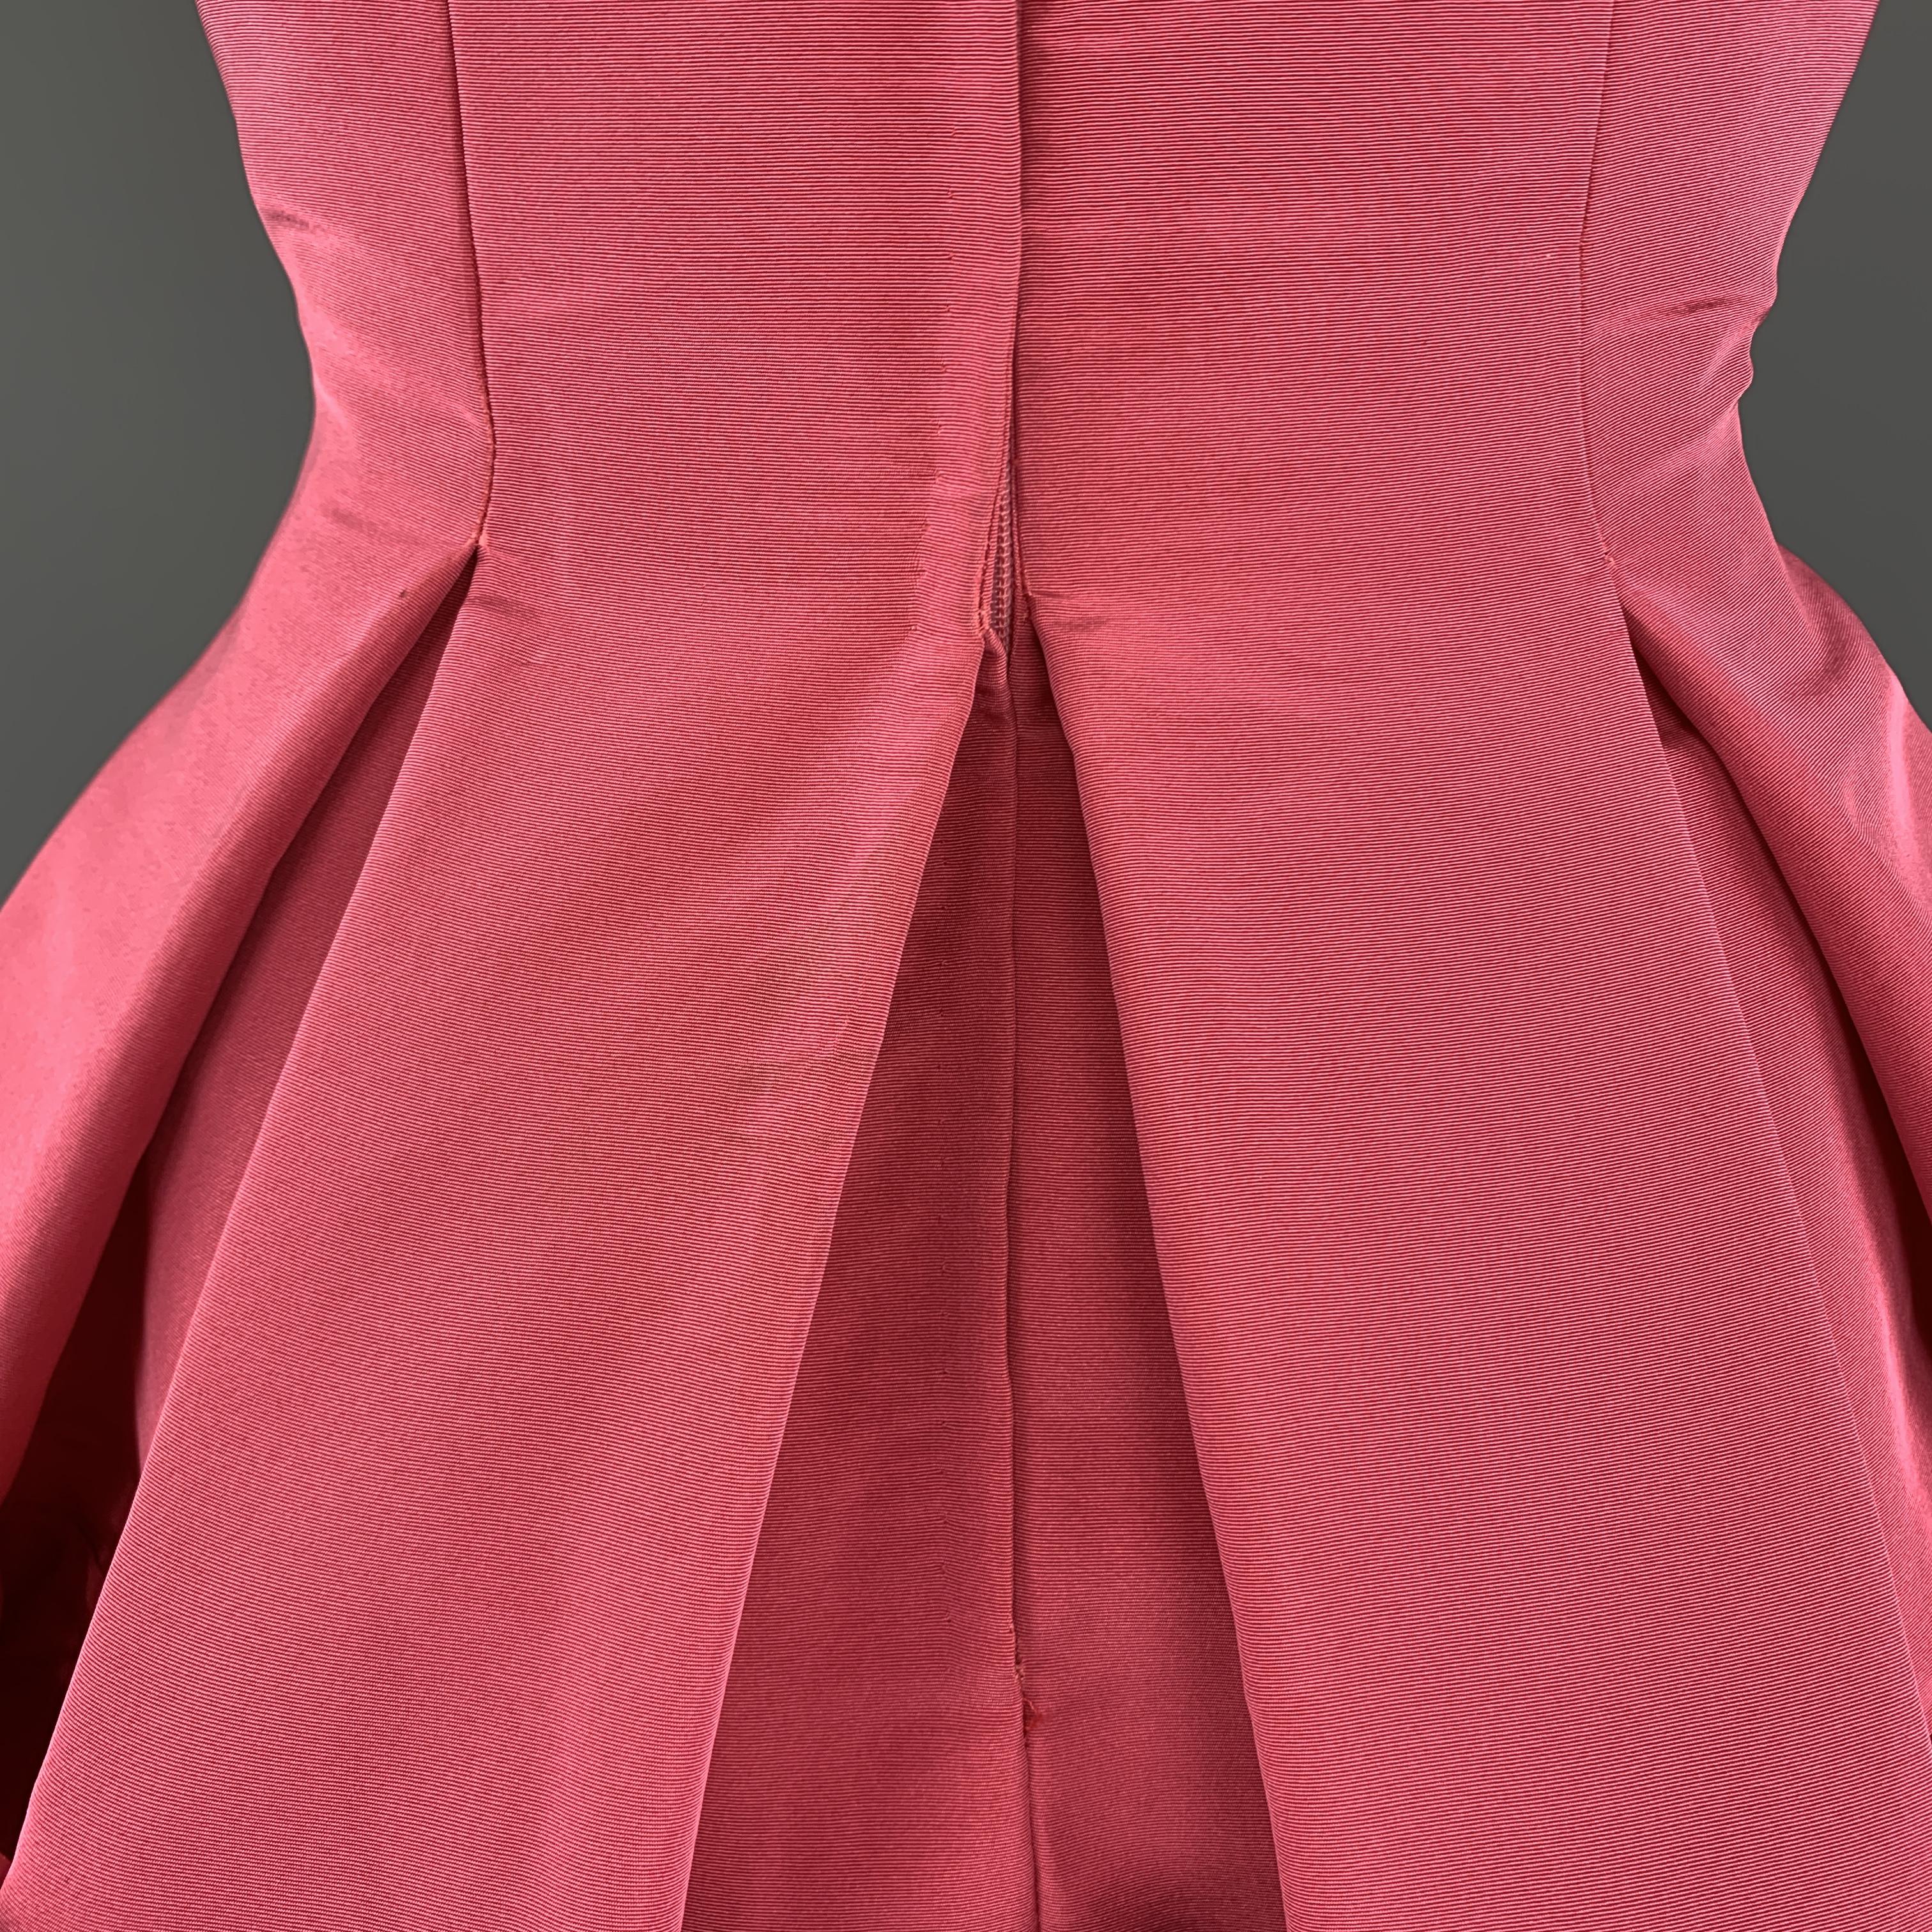 OSCAR DE LA RENTA Size 8 Pink Faille Structured Skirt Cocktail Dress 4